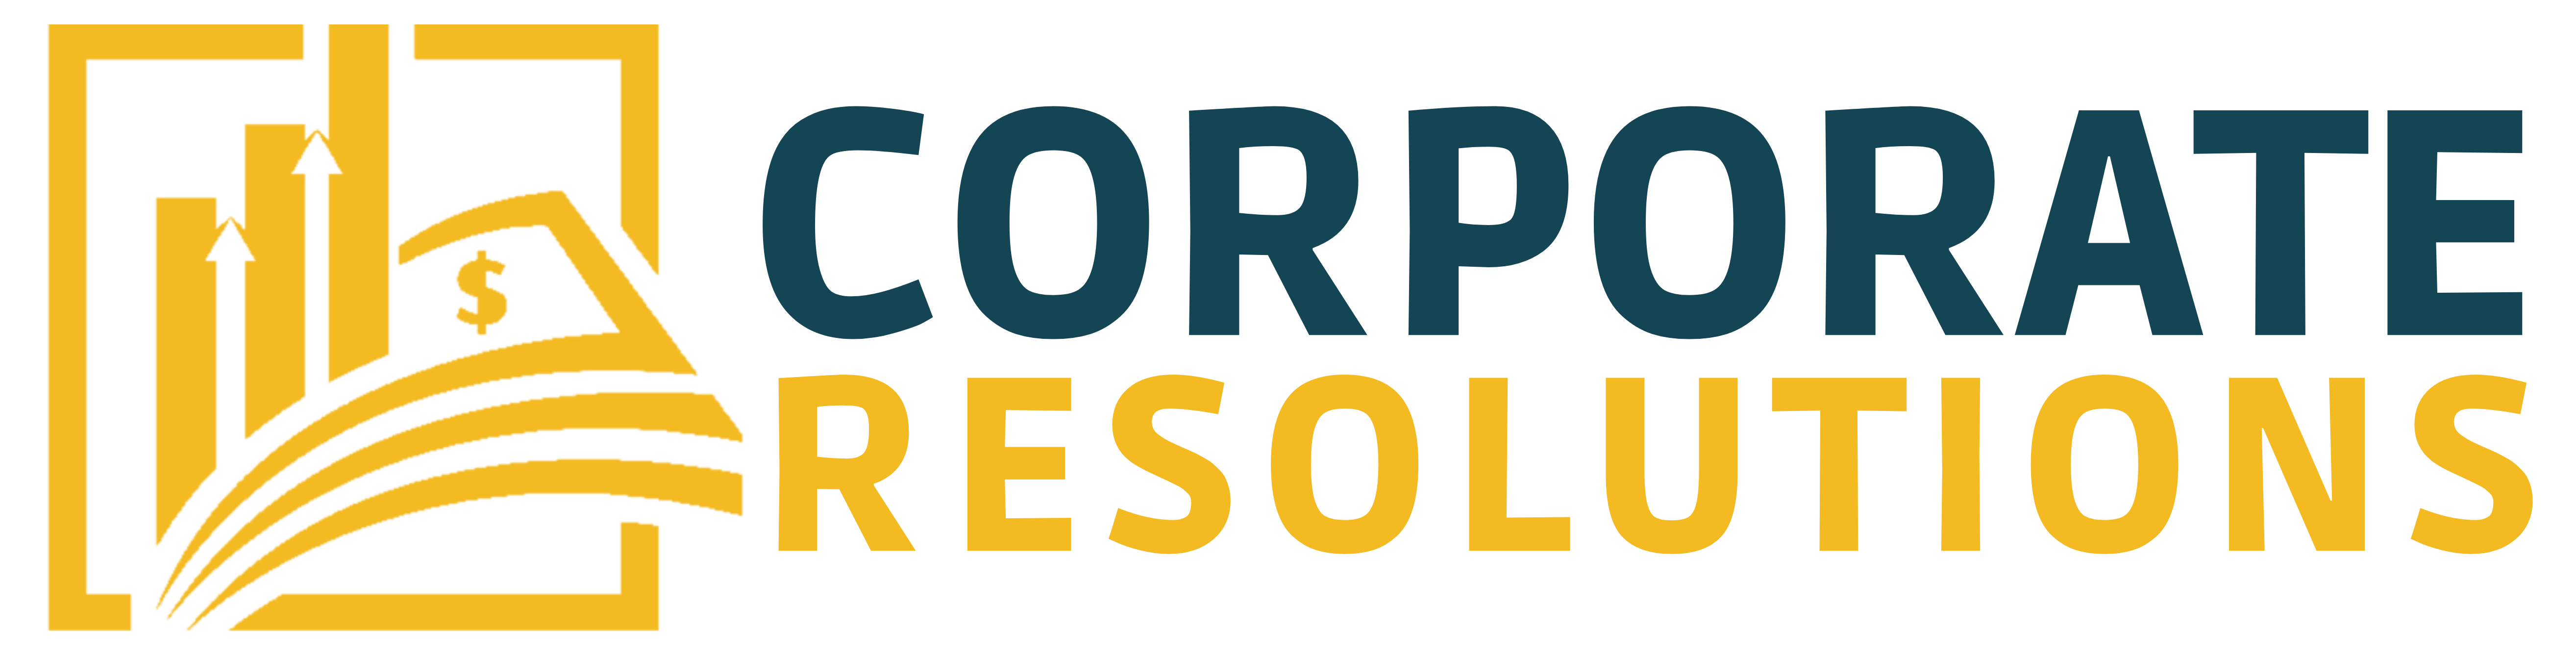 Corporate Resolutions Logo